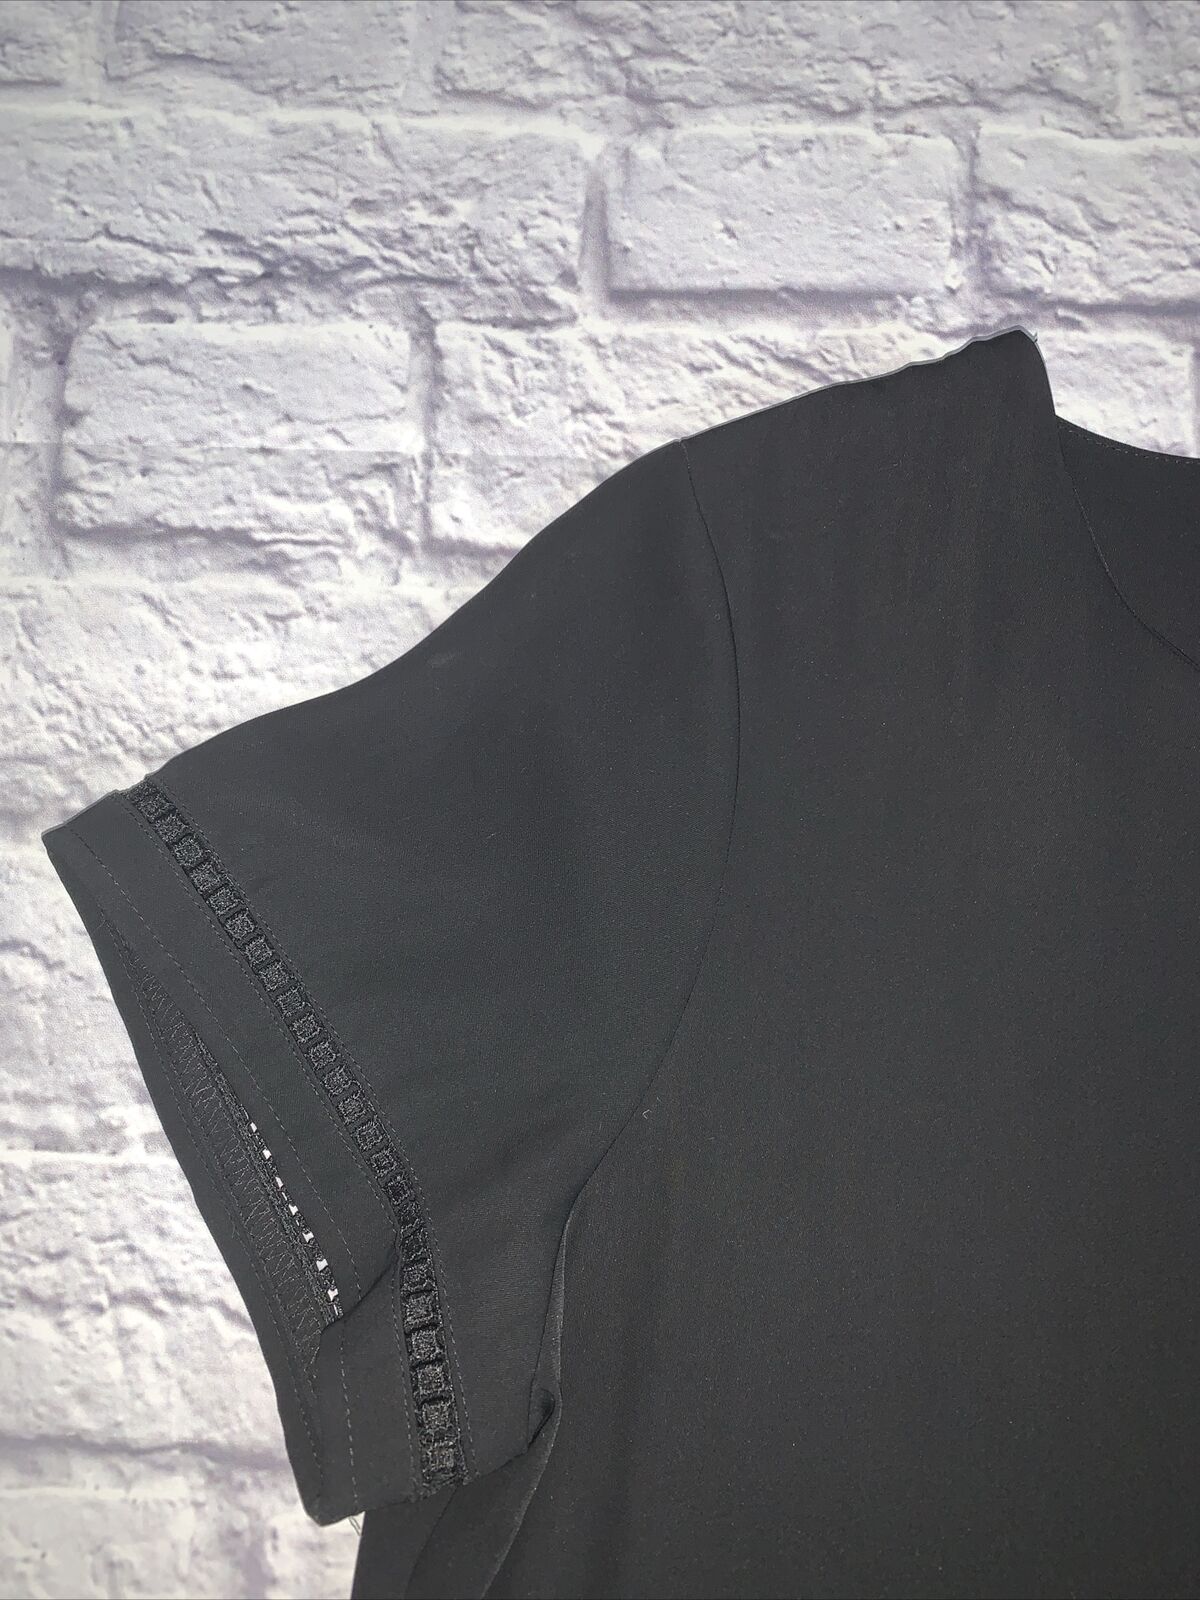 Cynthia Rowley Women's 12 Sheath Dress Black Shor… - image 3